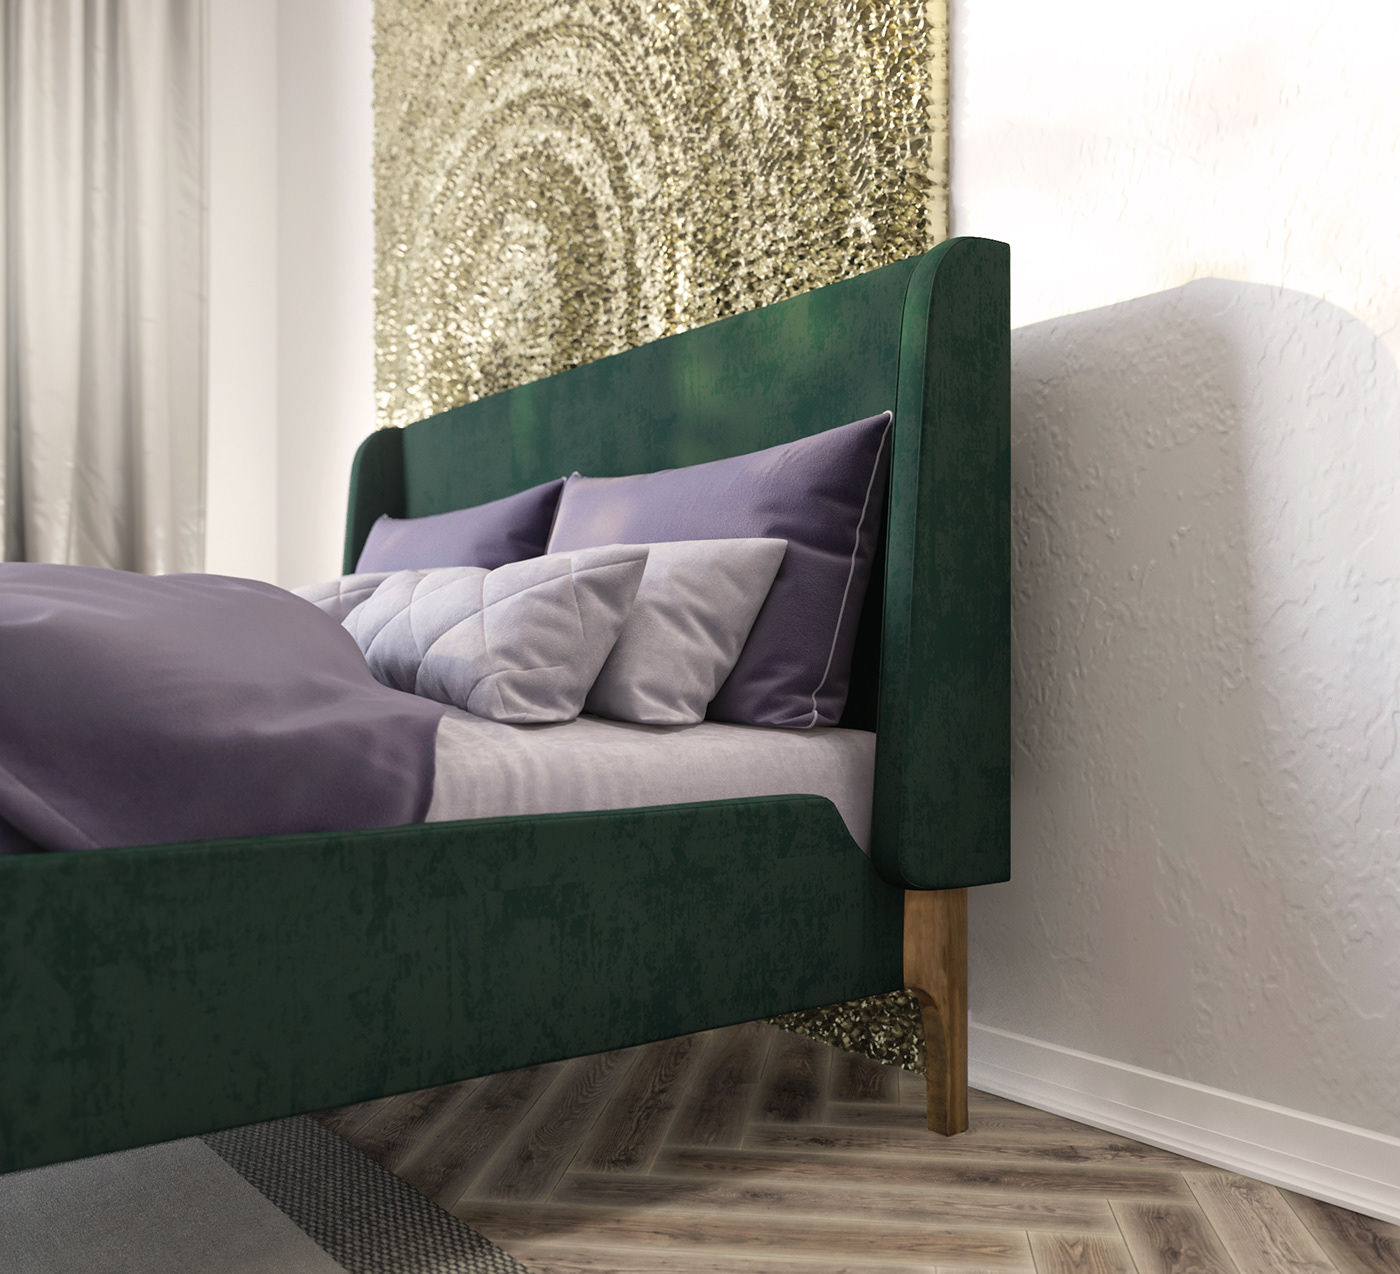 bed milan green wood modern fabric soft cover bedroom Interior furniture CGI 3drender 3D Modelling